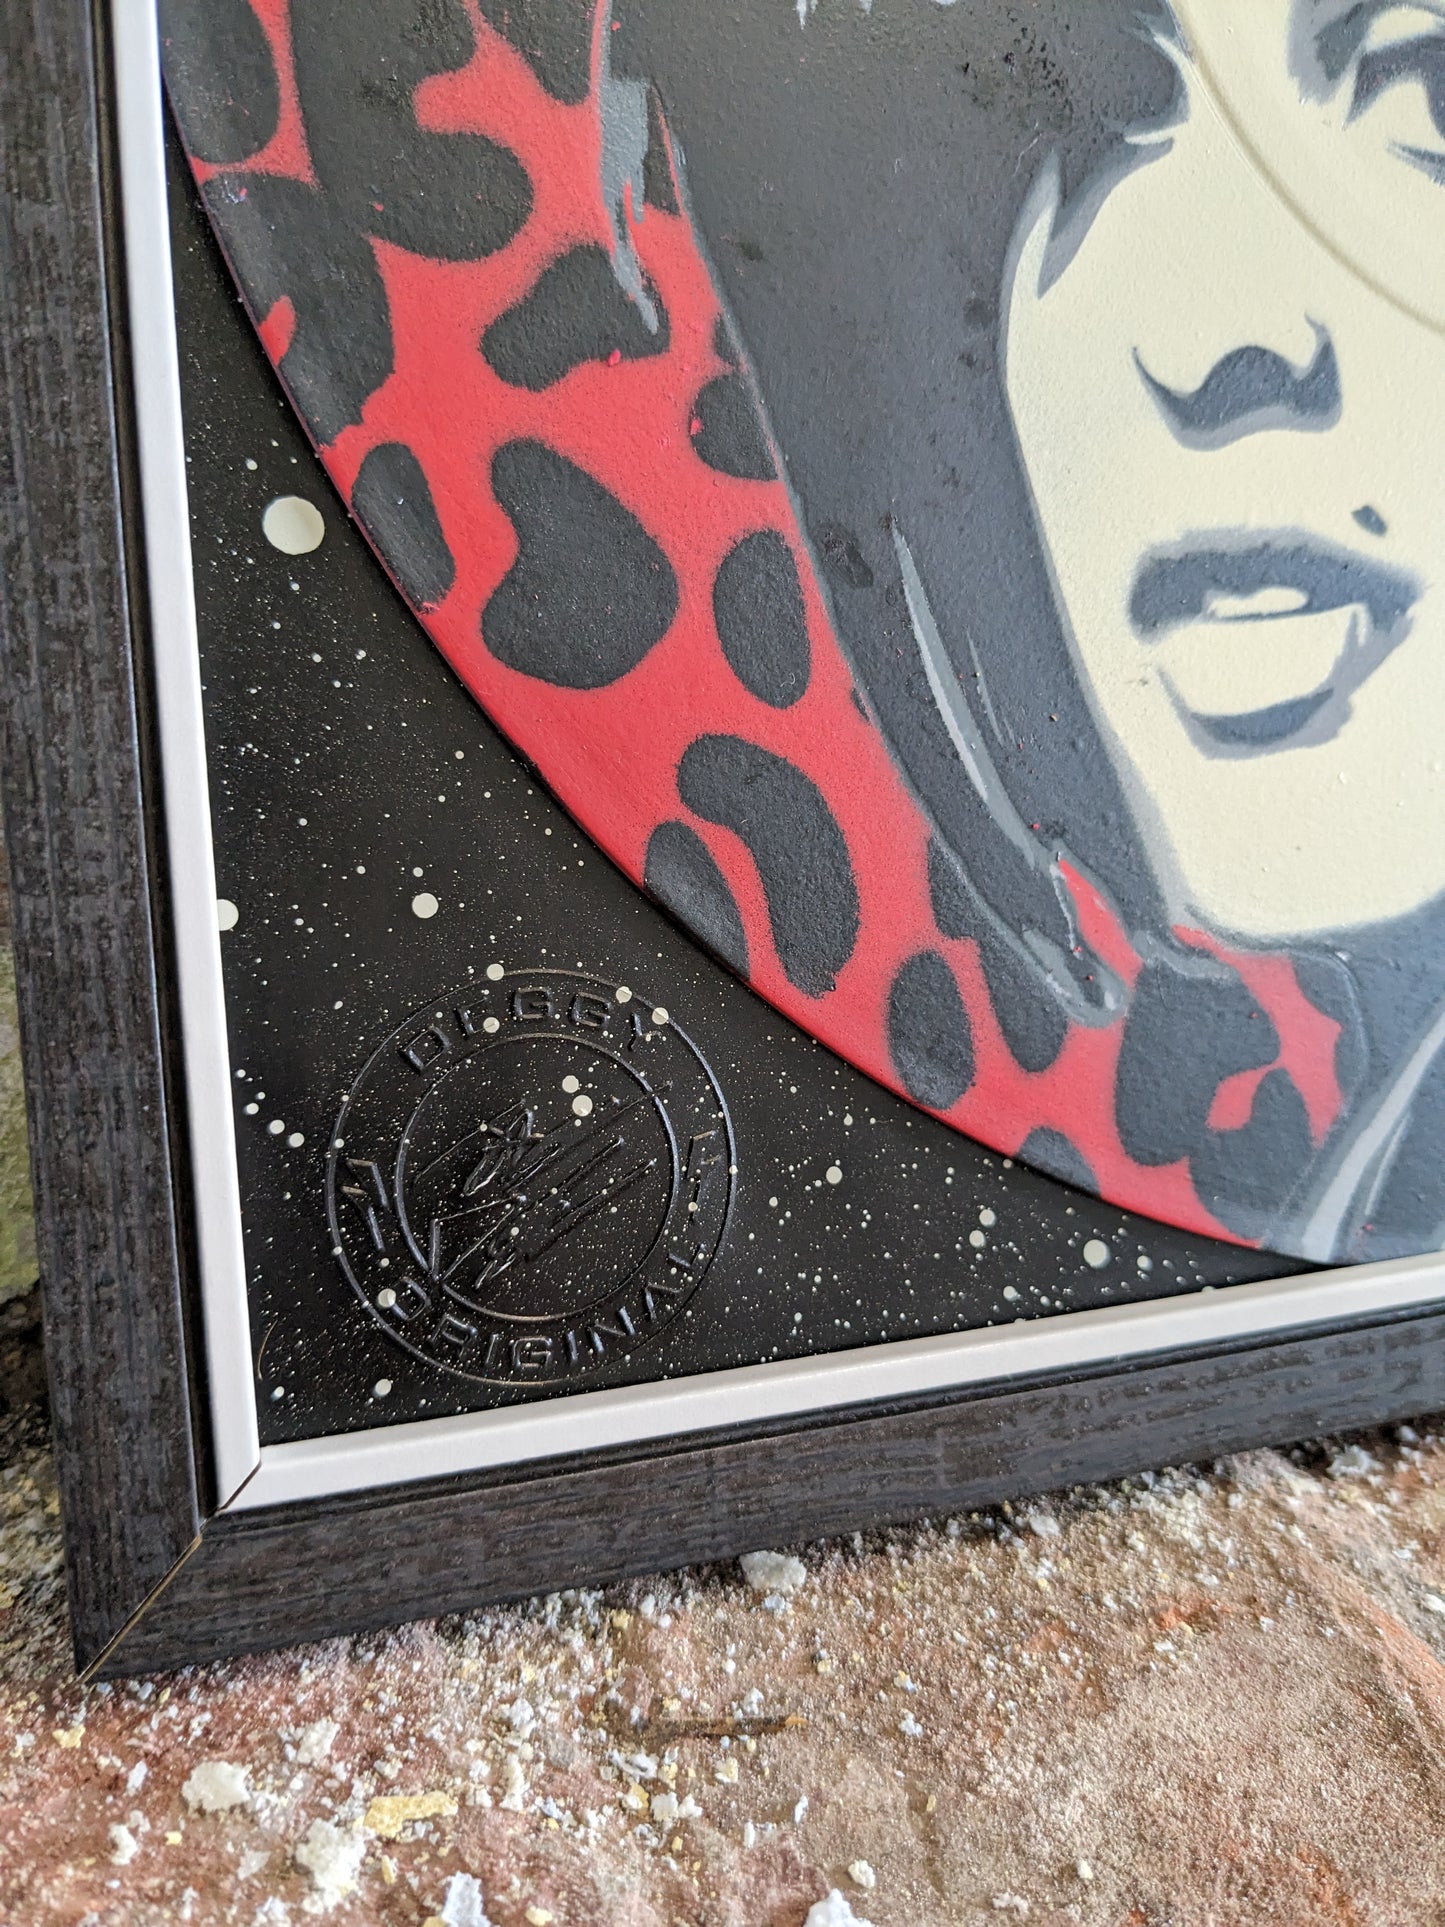 Amy Winehouse 12" Vinyl Record Original Spray Painting